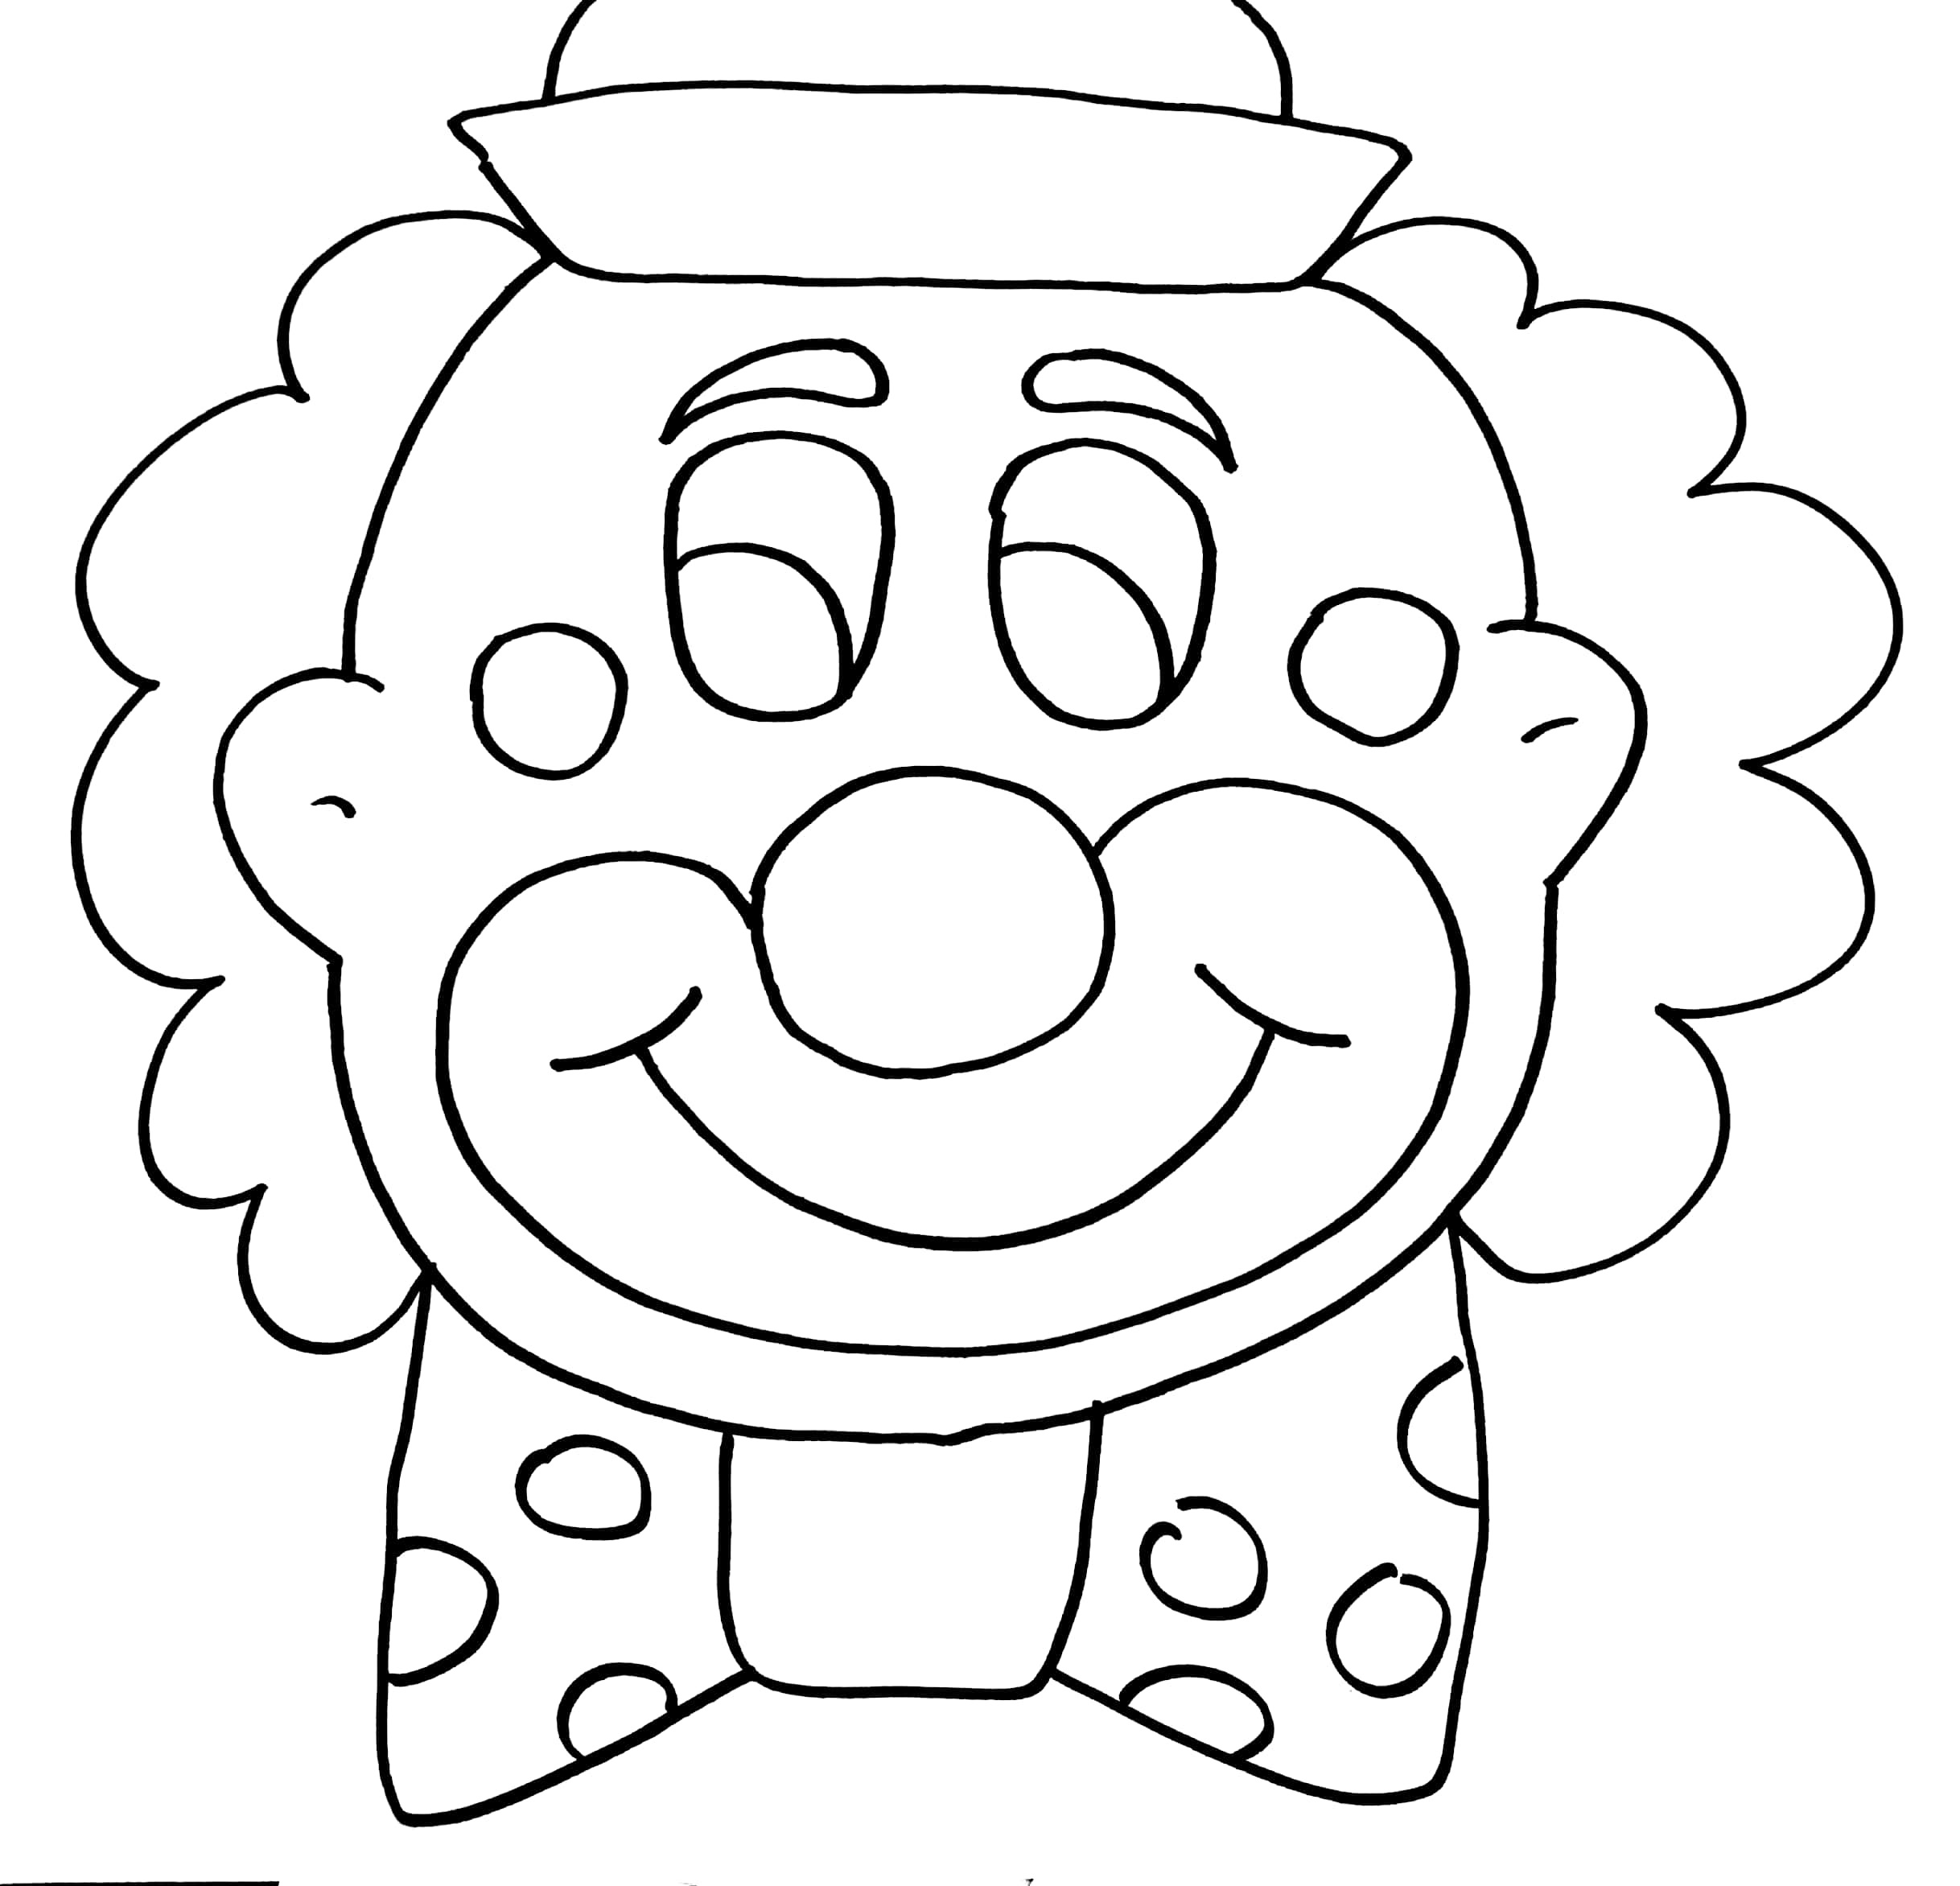 Шаблон маски клоуна распечатать. Клоун раскраска. Клоун раскраска для детей. Лицо клоуна раскраска. Лицо клоуна раскраски для детей.